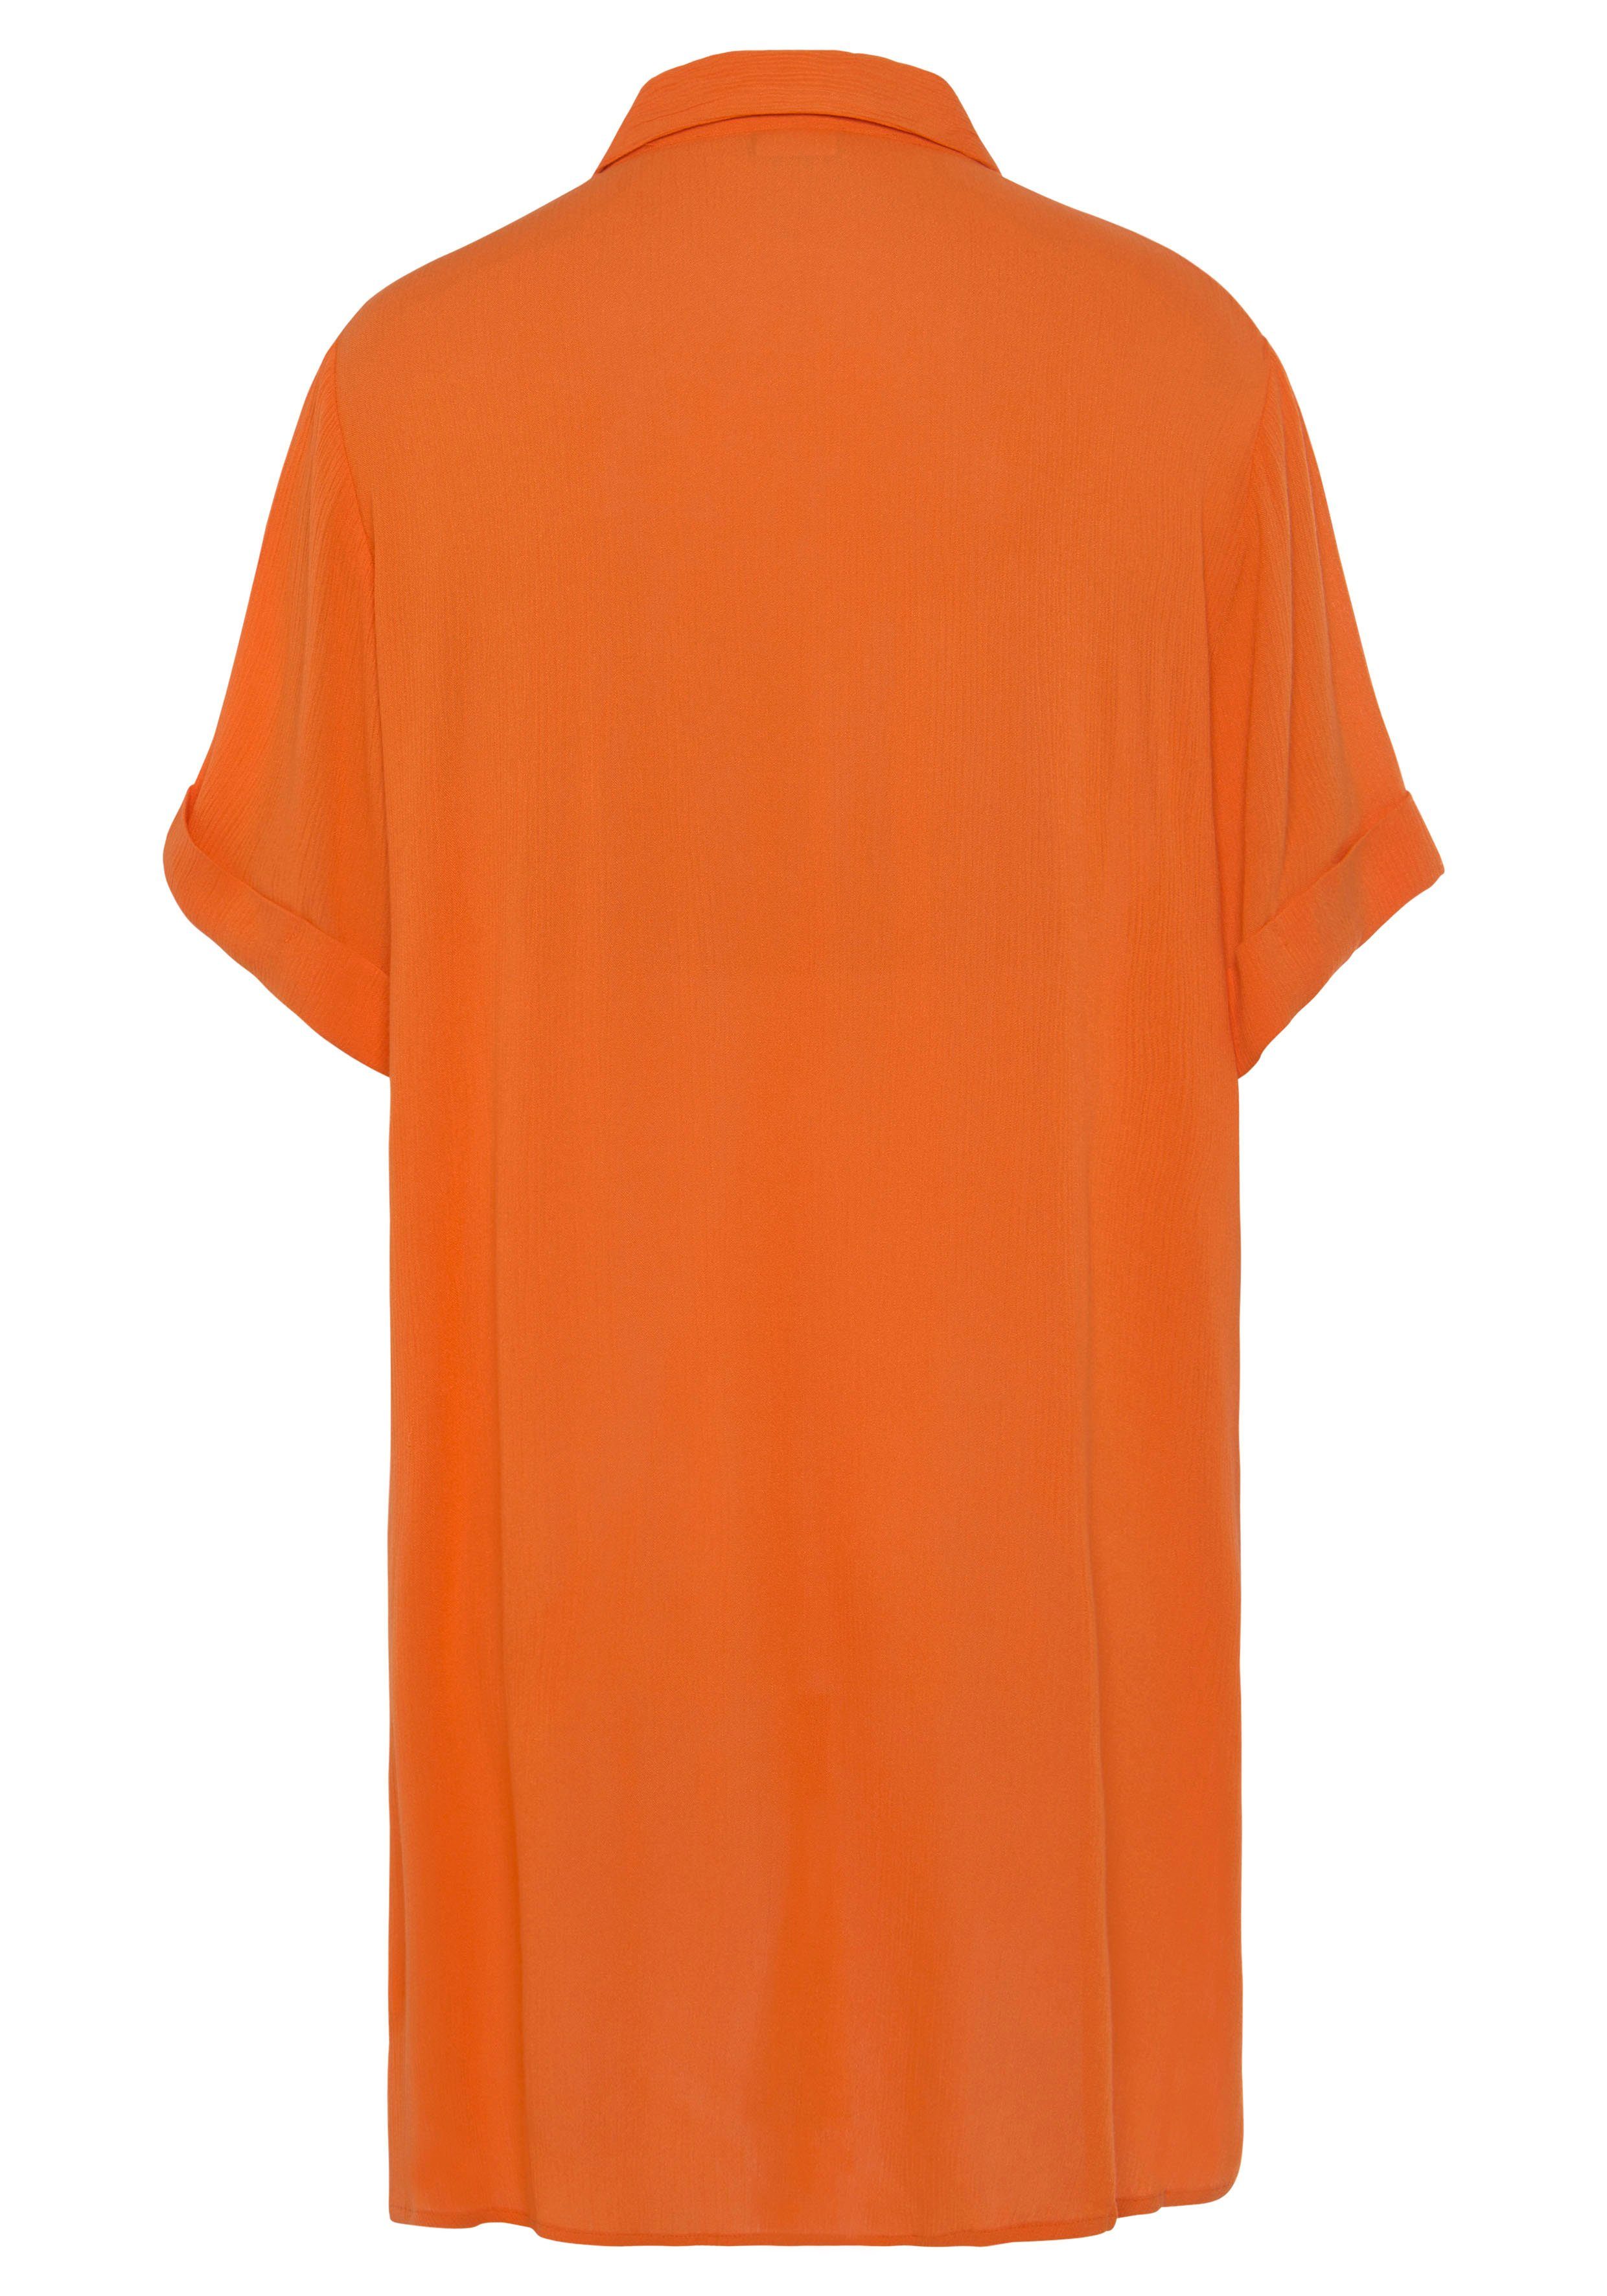 LASCANA Longbluse mit Knopfleiste, orange Blusenkleid, Kurzarmbluse, sommerlich